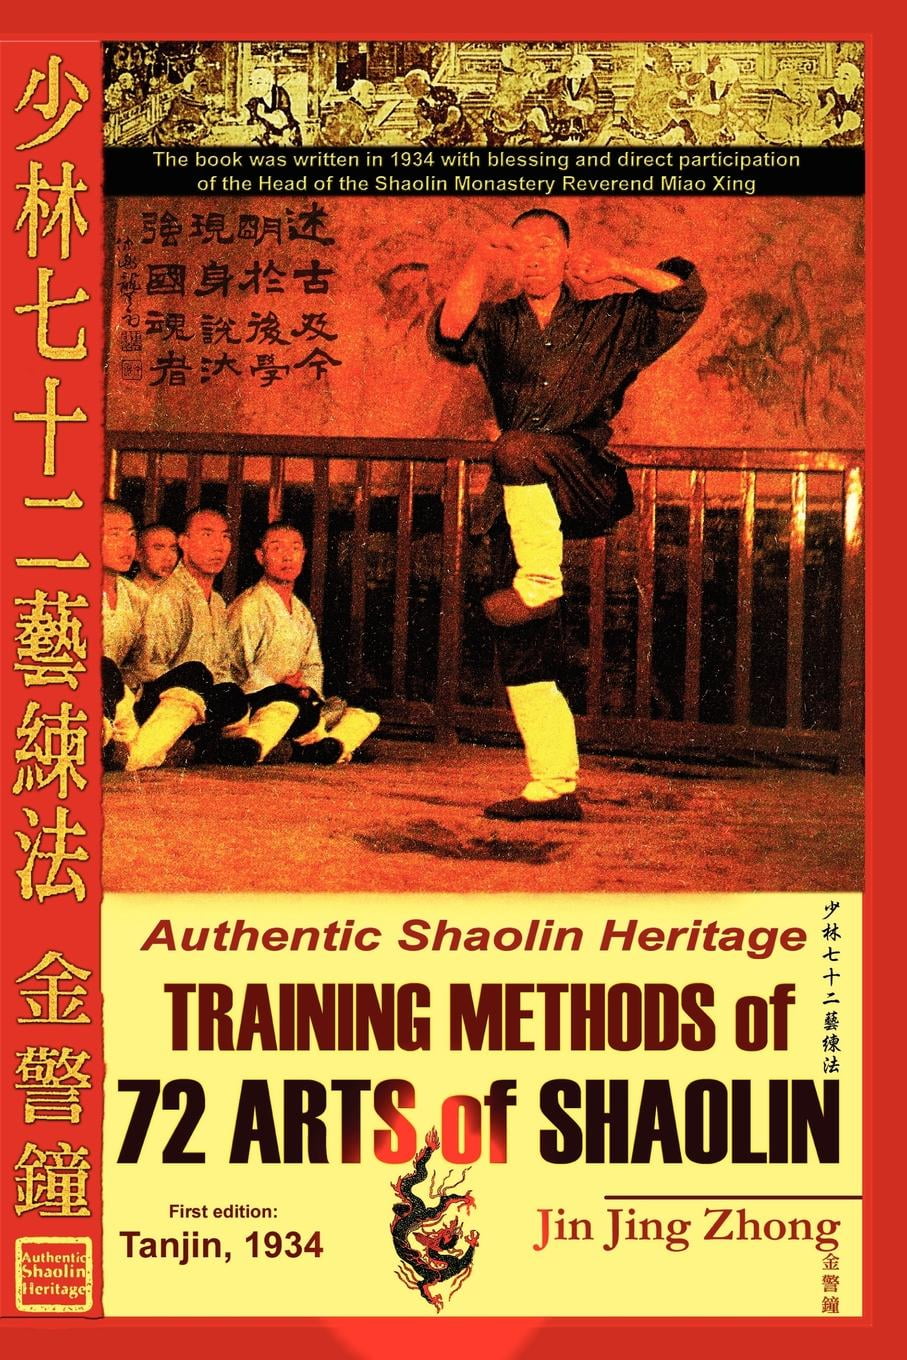 Authentic Shaolin Heritage Training Methods of 72 Arts of Shaolin